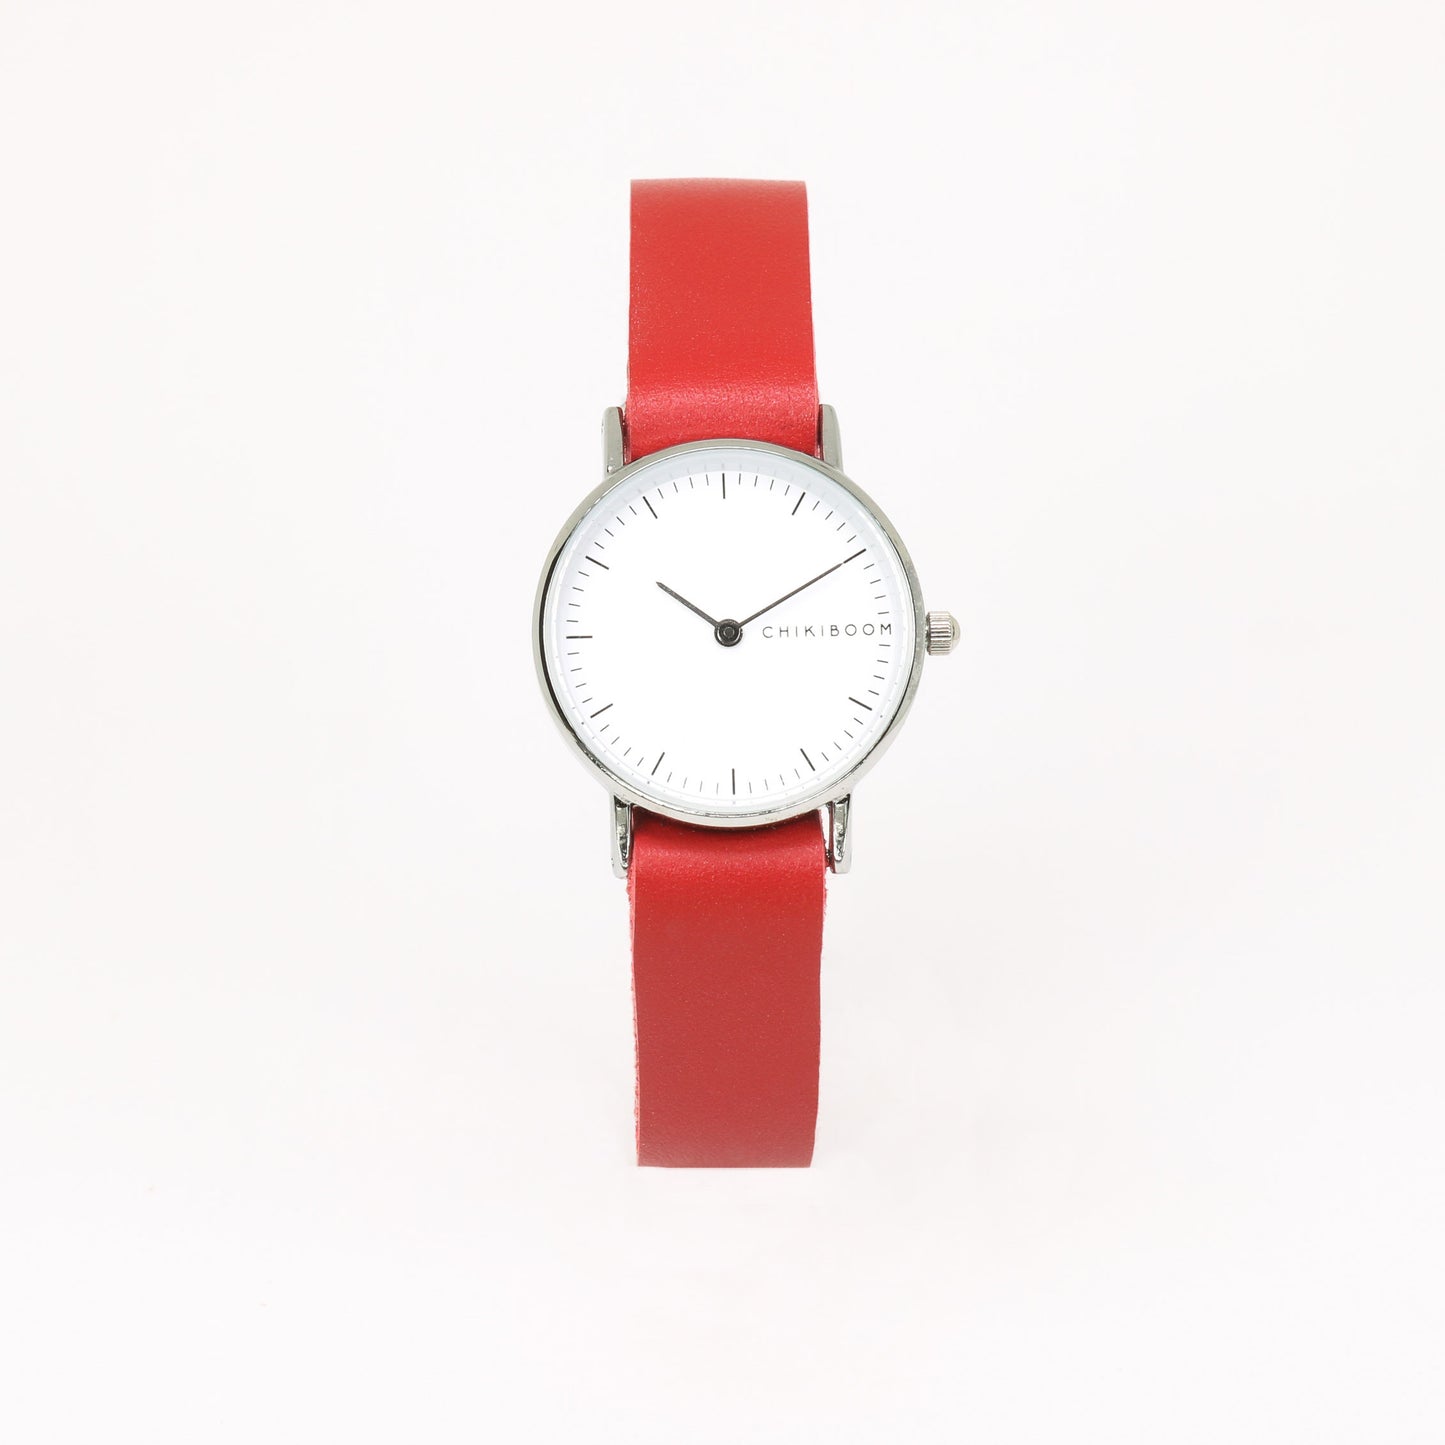 Red / white women's watch